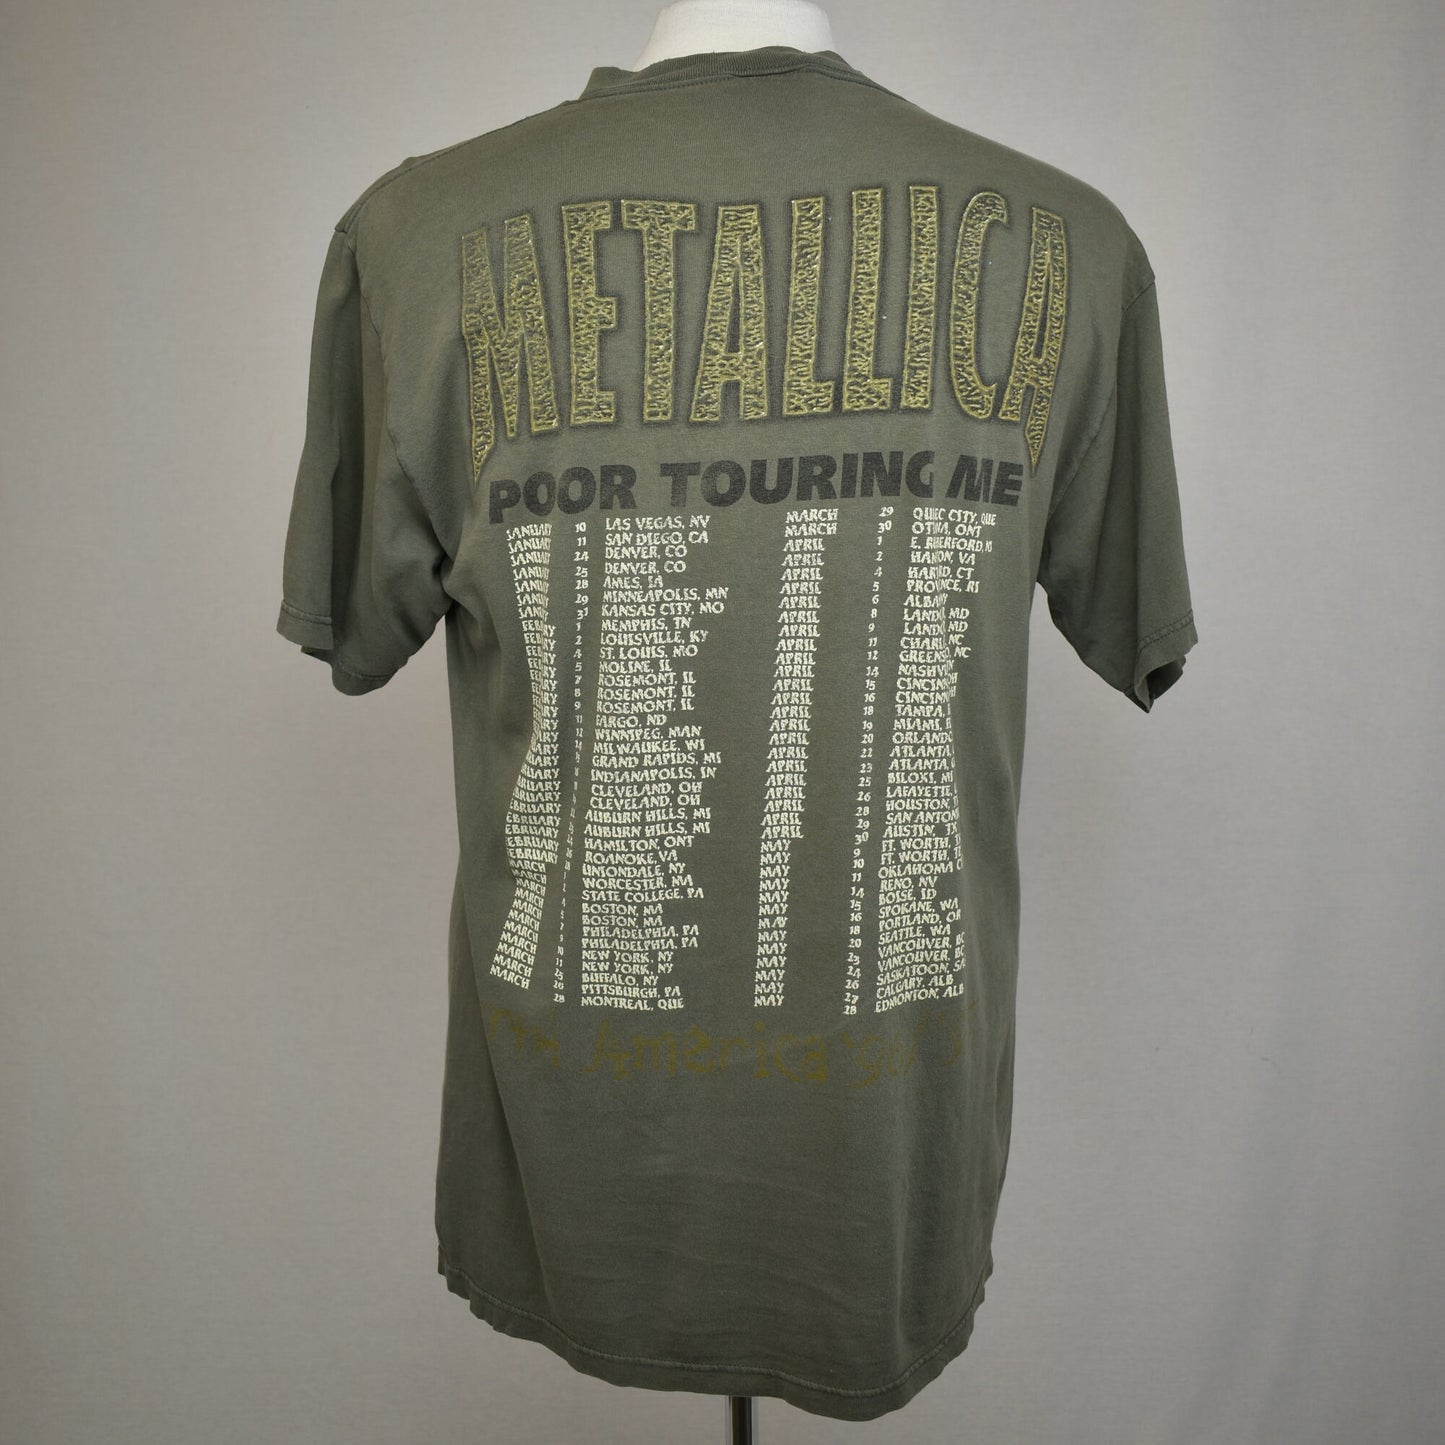 Vintage 90s Metallica Tour T-shirt - Poor Touring Me Tee - North America '96 - '97